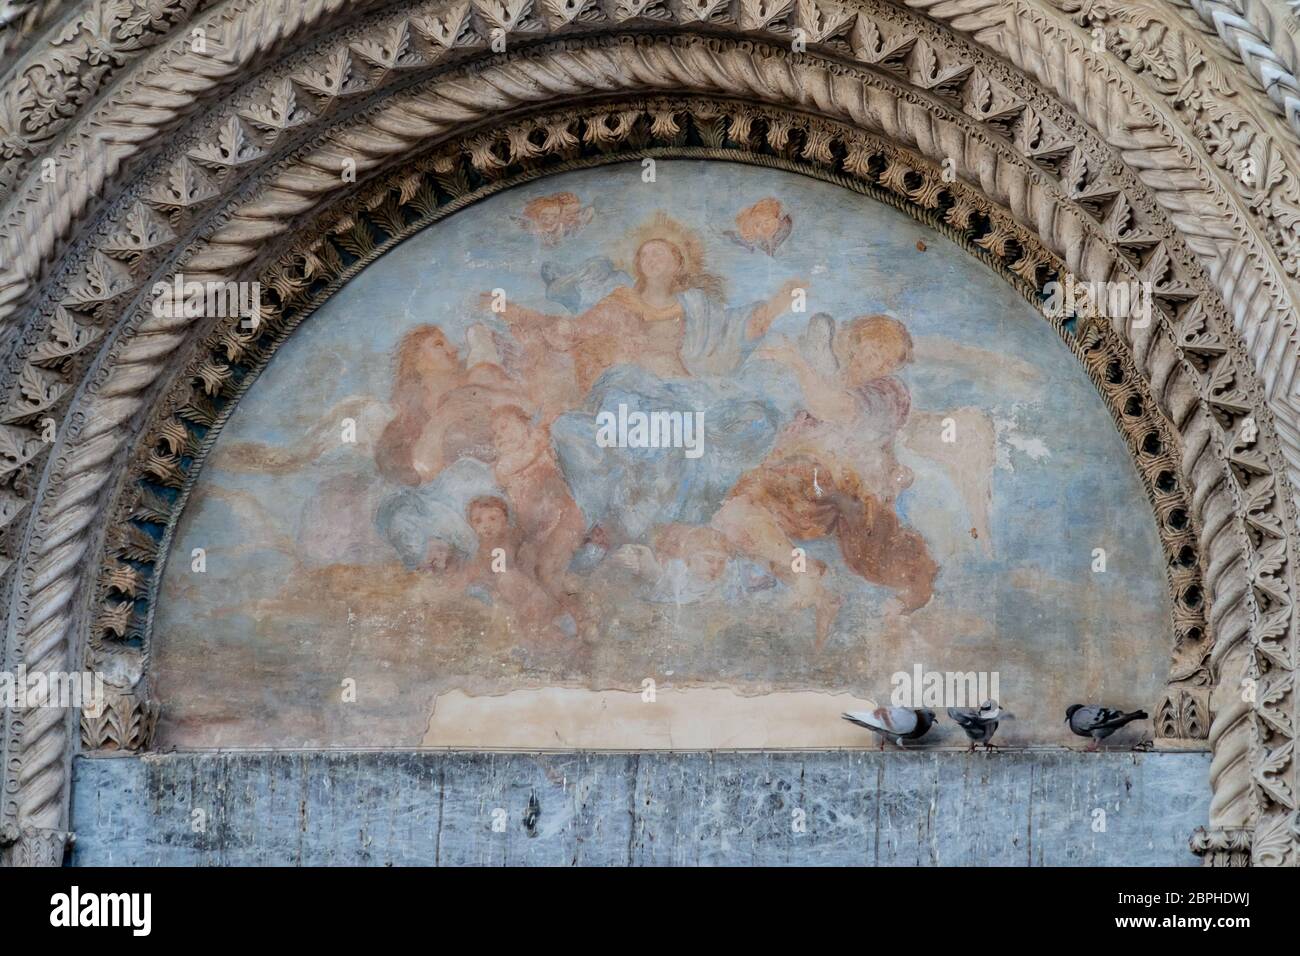 Atri, Teramo, Italien, August 2019: Fresko über dem Tor der Kathedrale von Atri, Basilika Santa Maria Assunta, Nationaldenkmal seit 1899, gotische Architektur Stockfoto